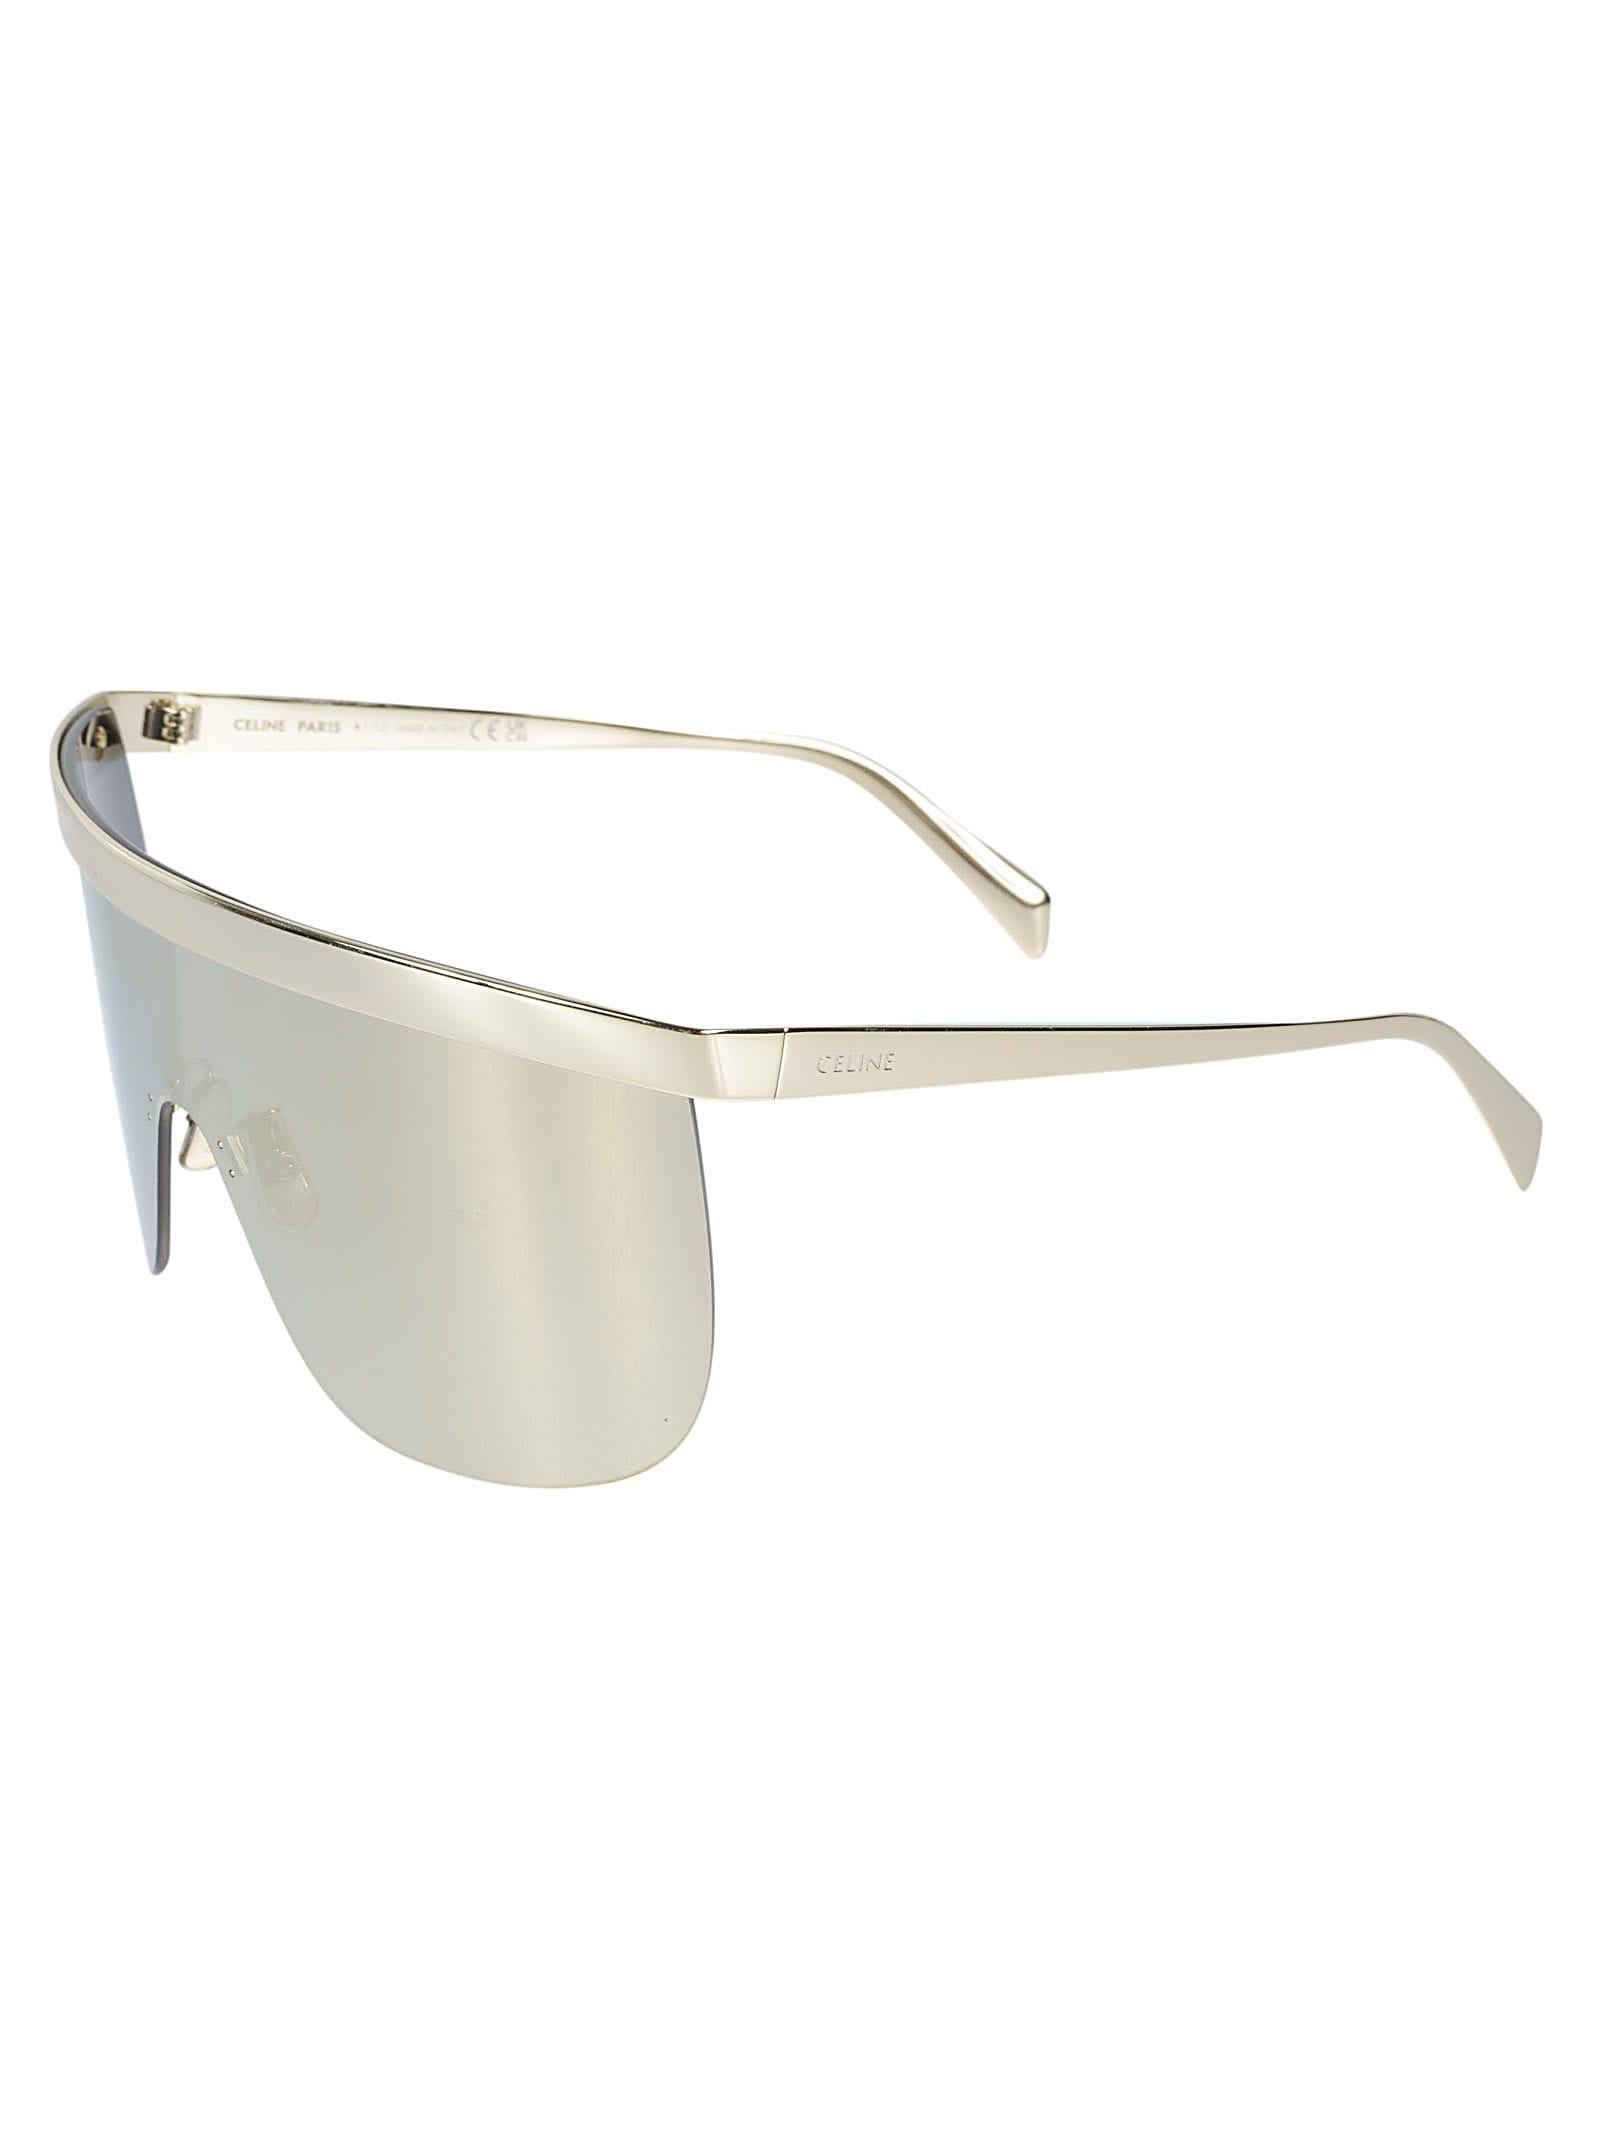 Celine Metallic Shield Sunglasses in Natural | Lyst